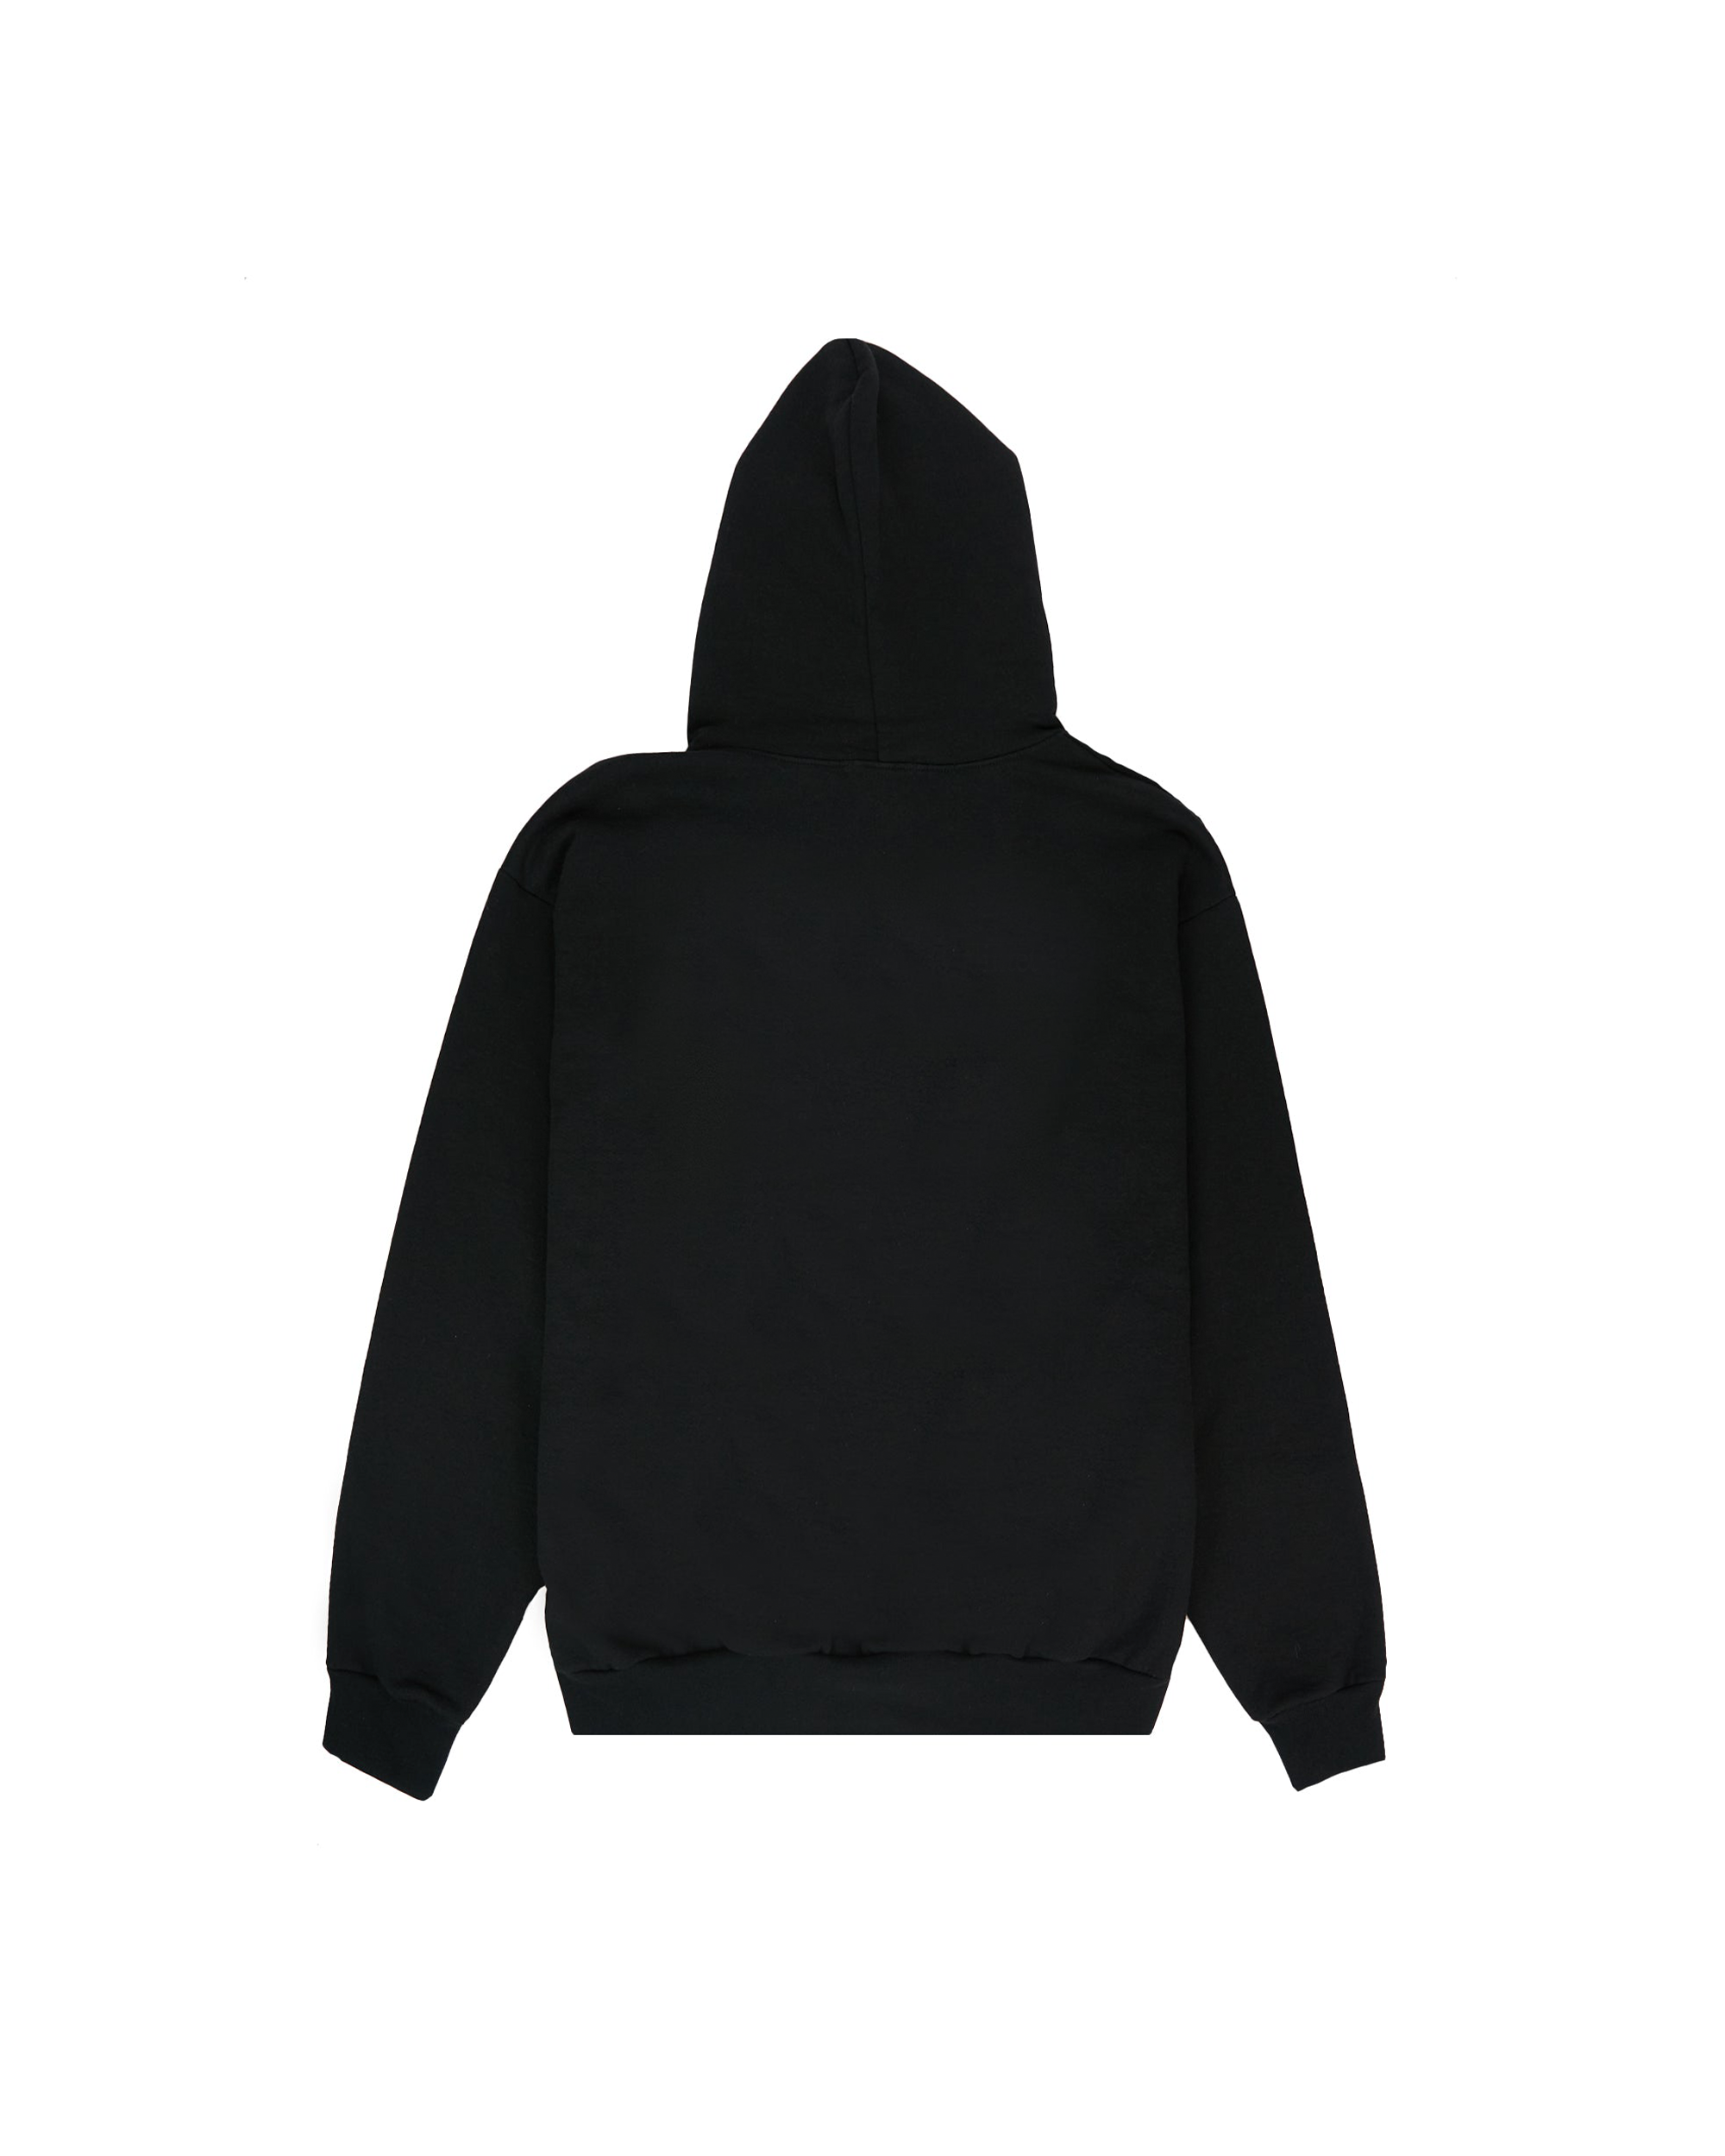 Flying High Hooded Sweatshirt - Black